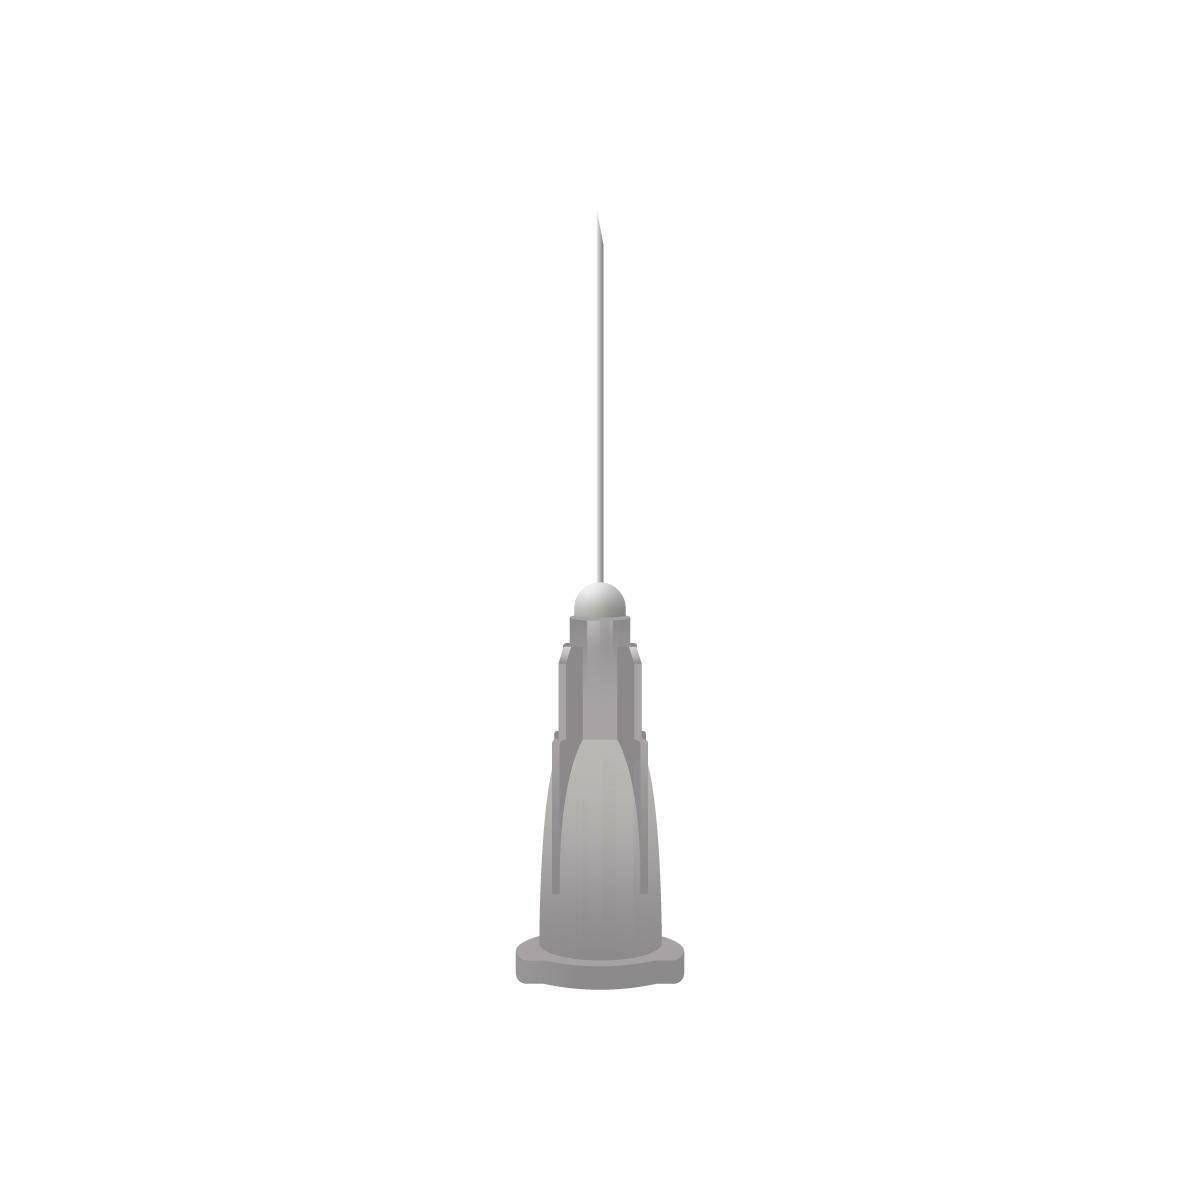 27g Grey 0.75 inch BD Microlance Needles (19mm x 0.4mm)